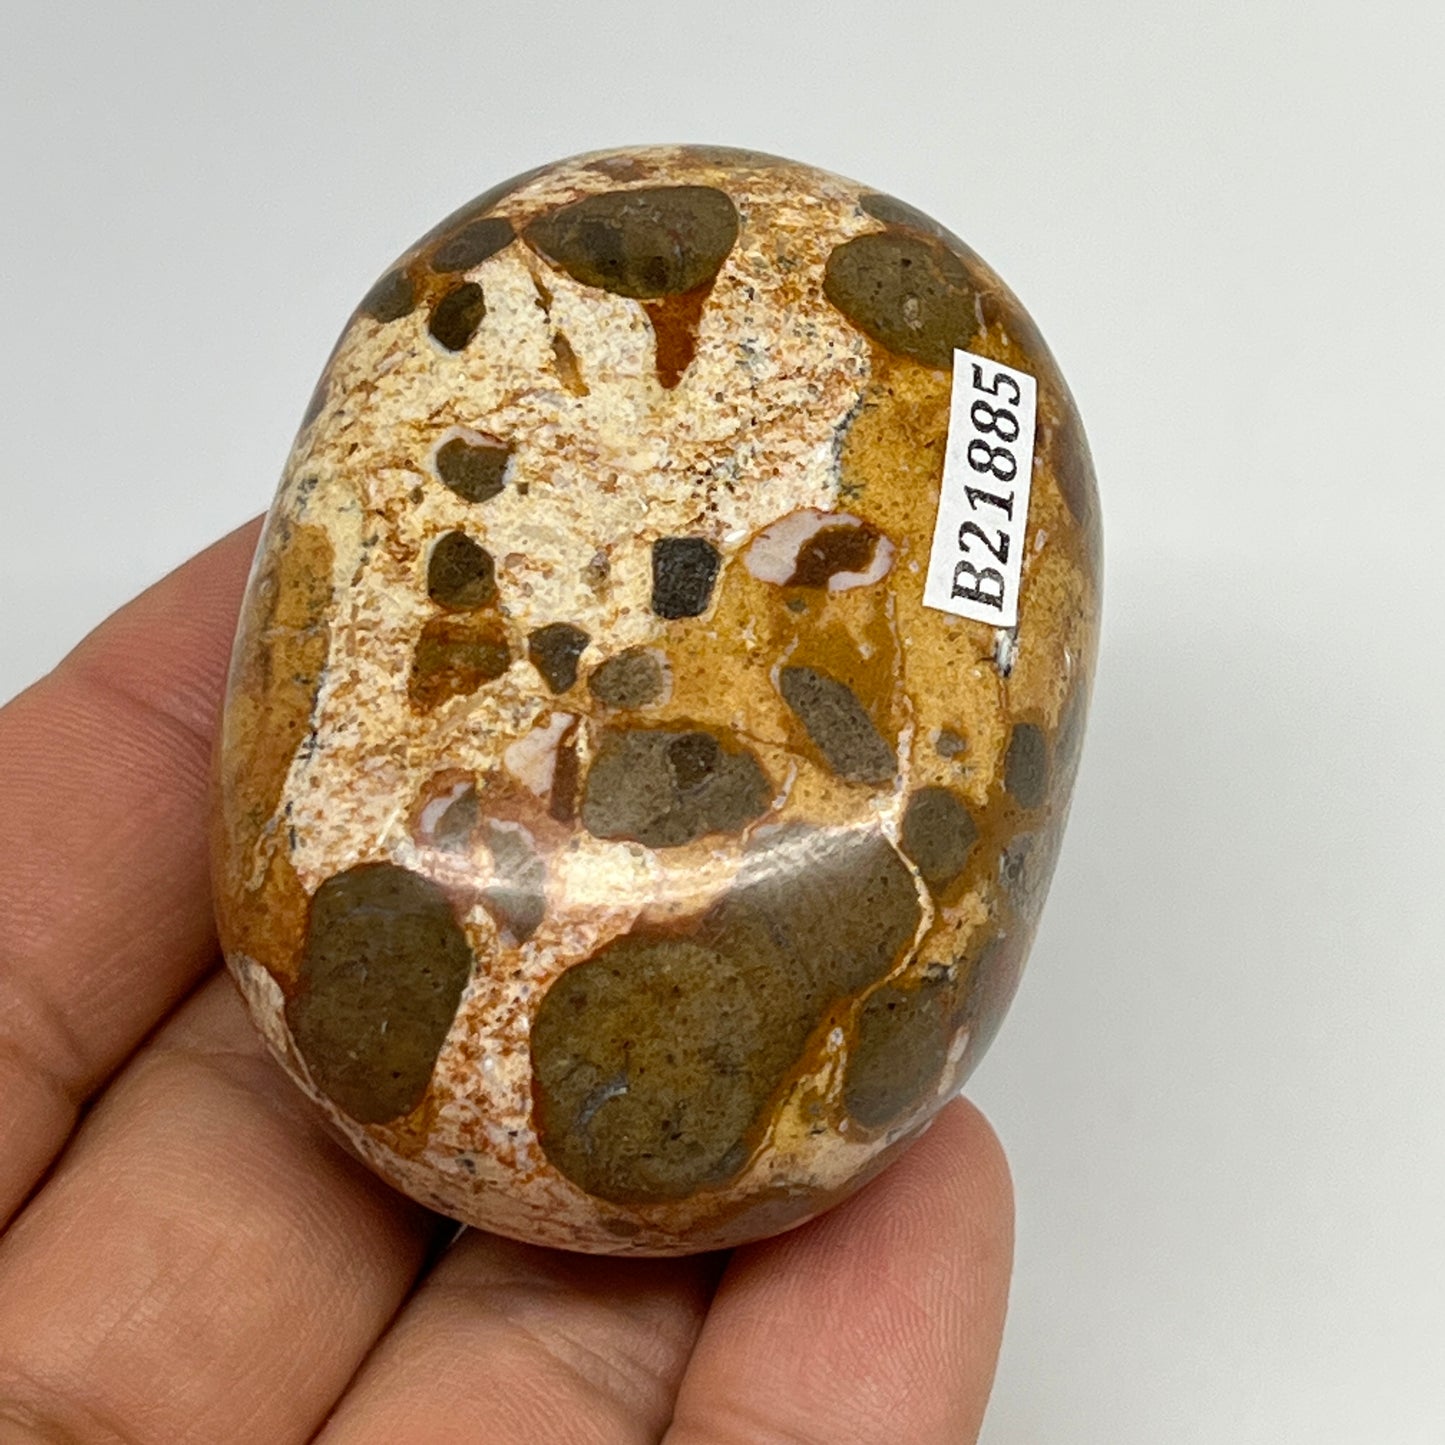 114.7g, 2.3"x1.7"x1.1", Natural Fruit Jasper Palm-Stone Gemstone @India, B21885